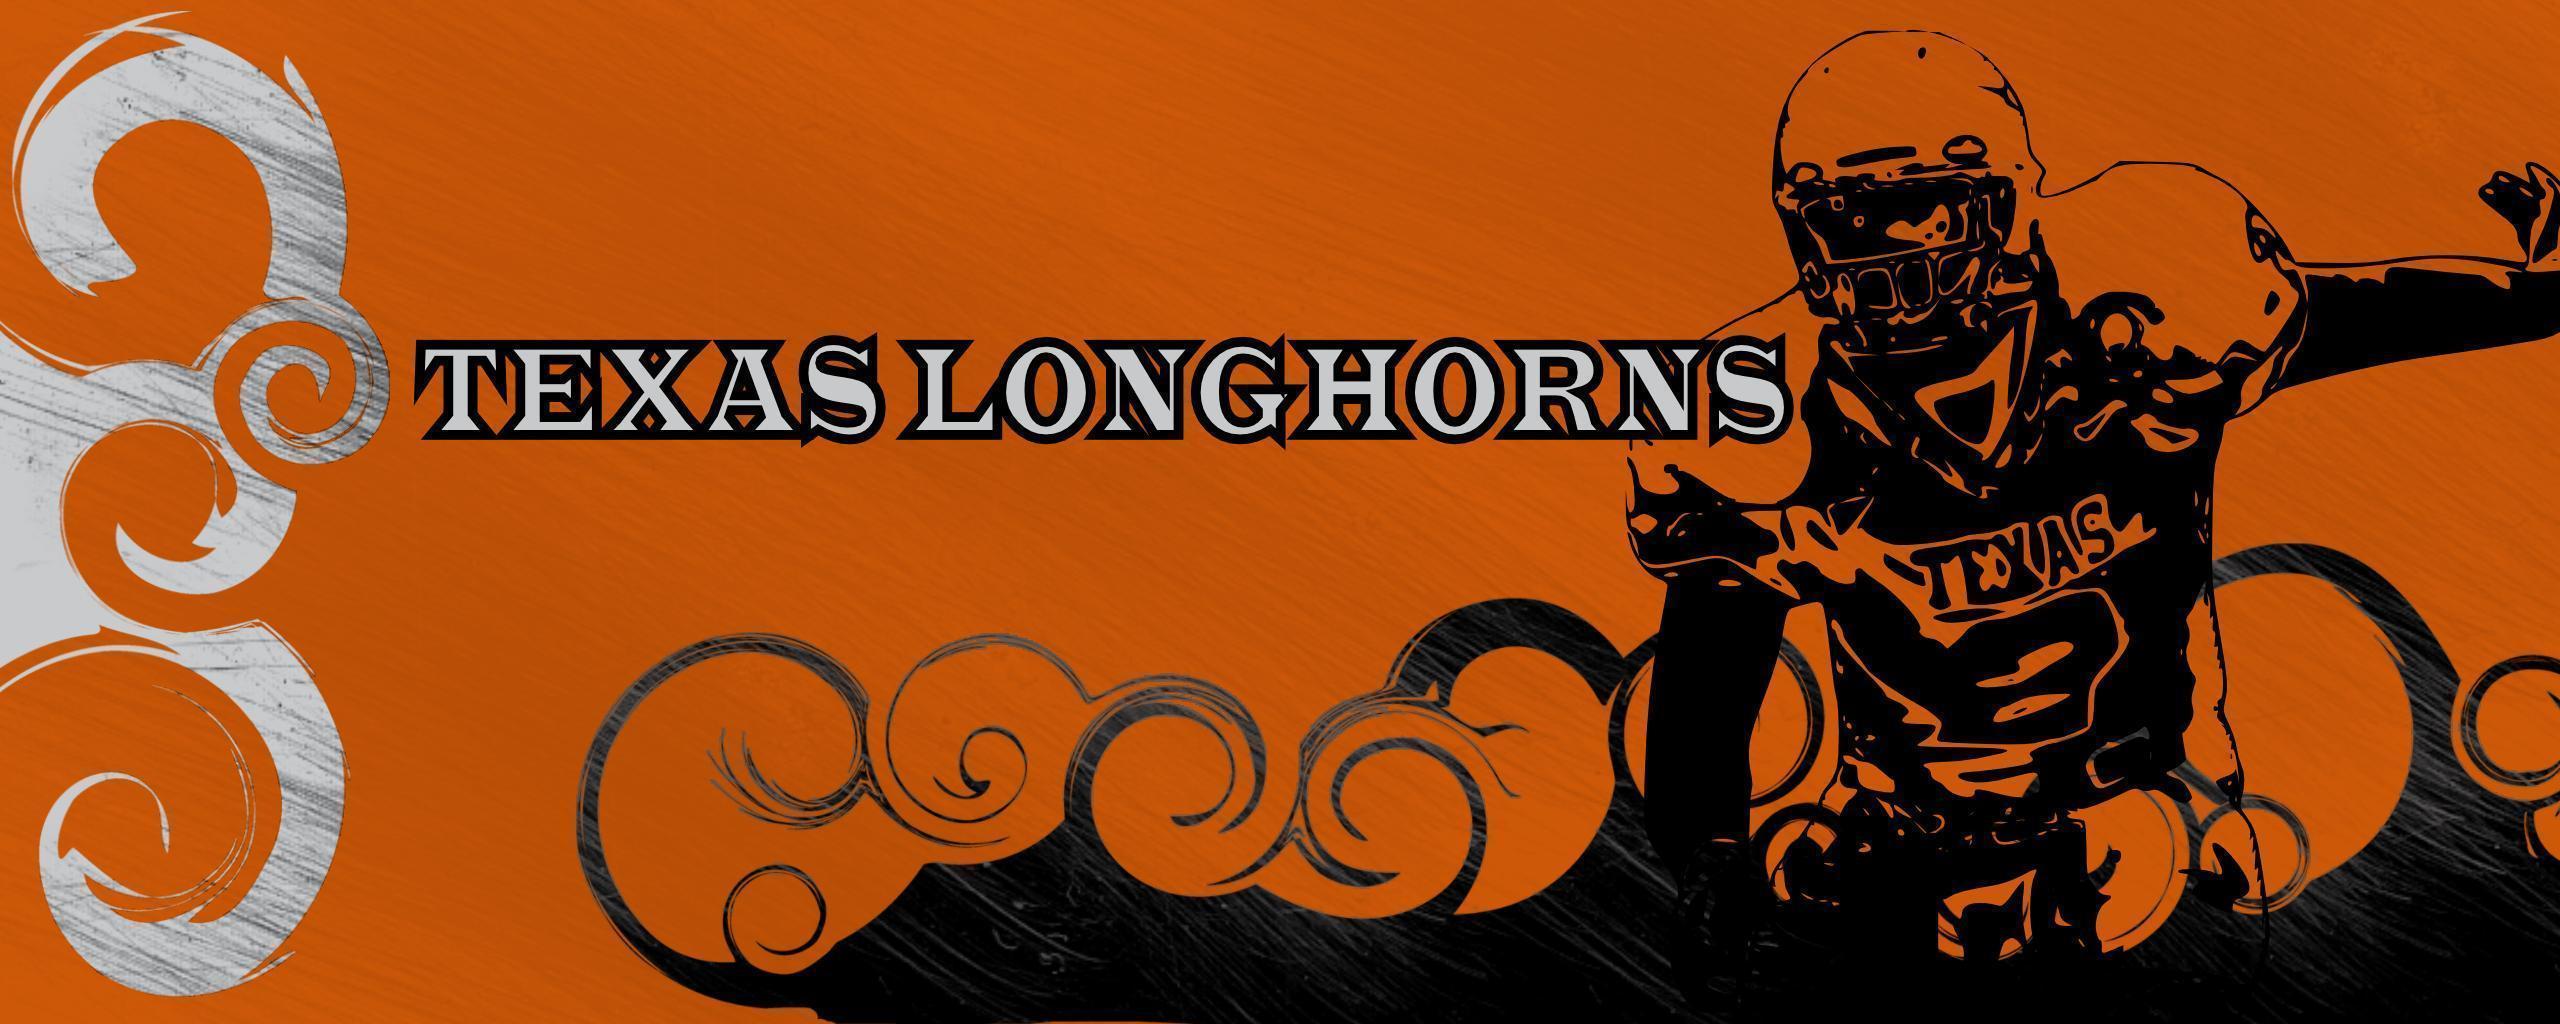 Texas Longhorns Wallpaper By. HD Wallpaper Range